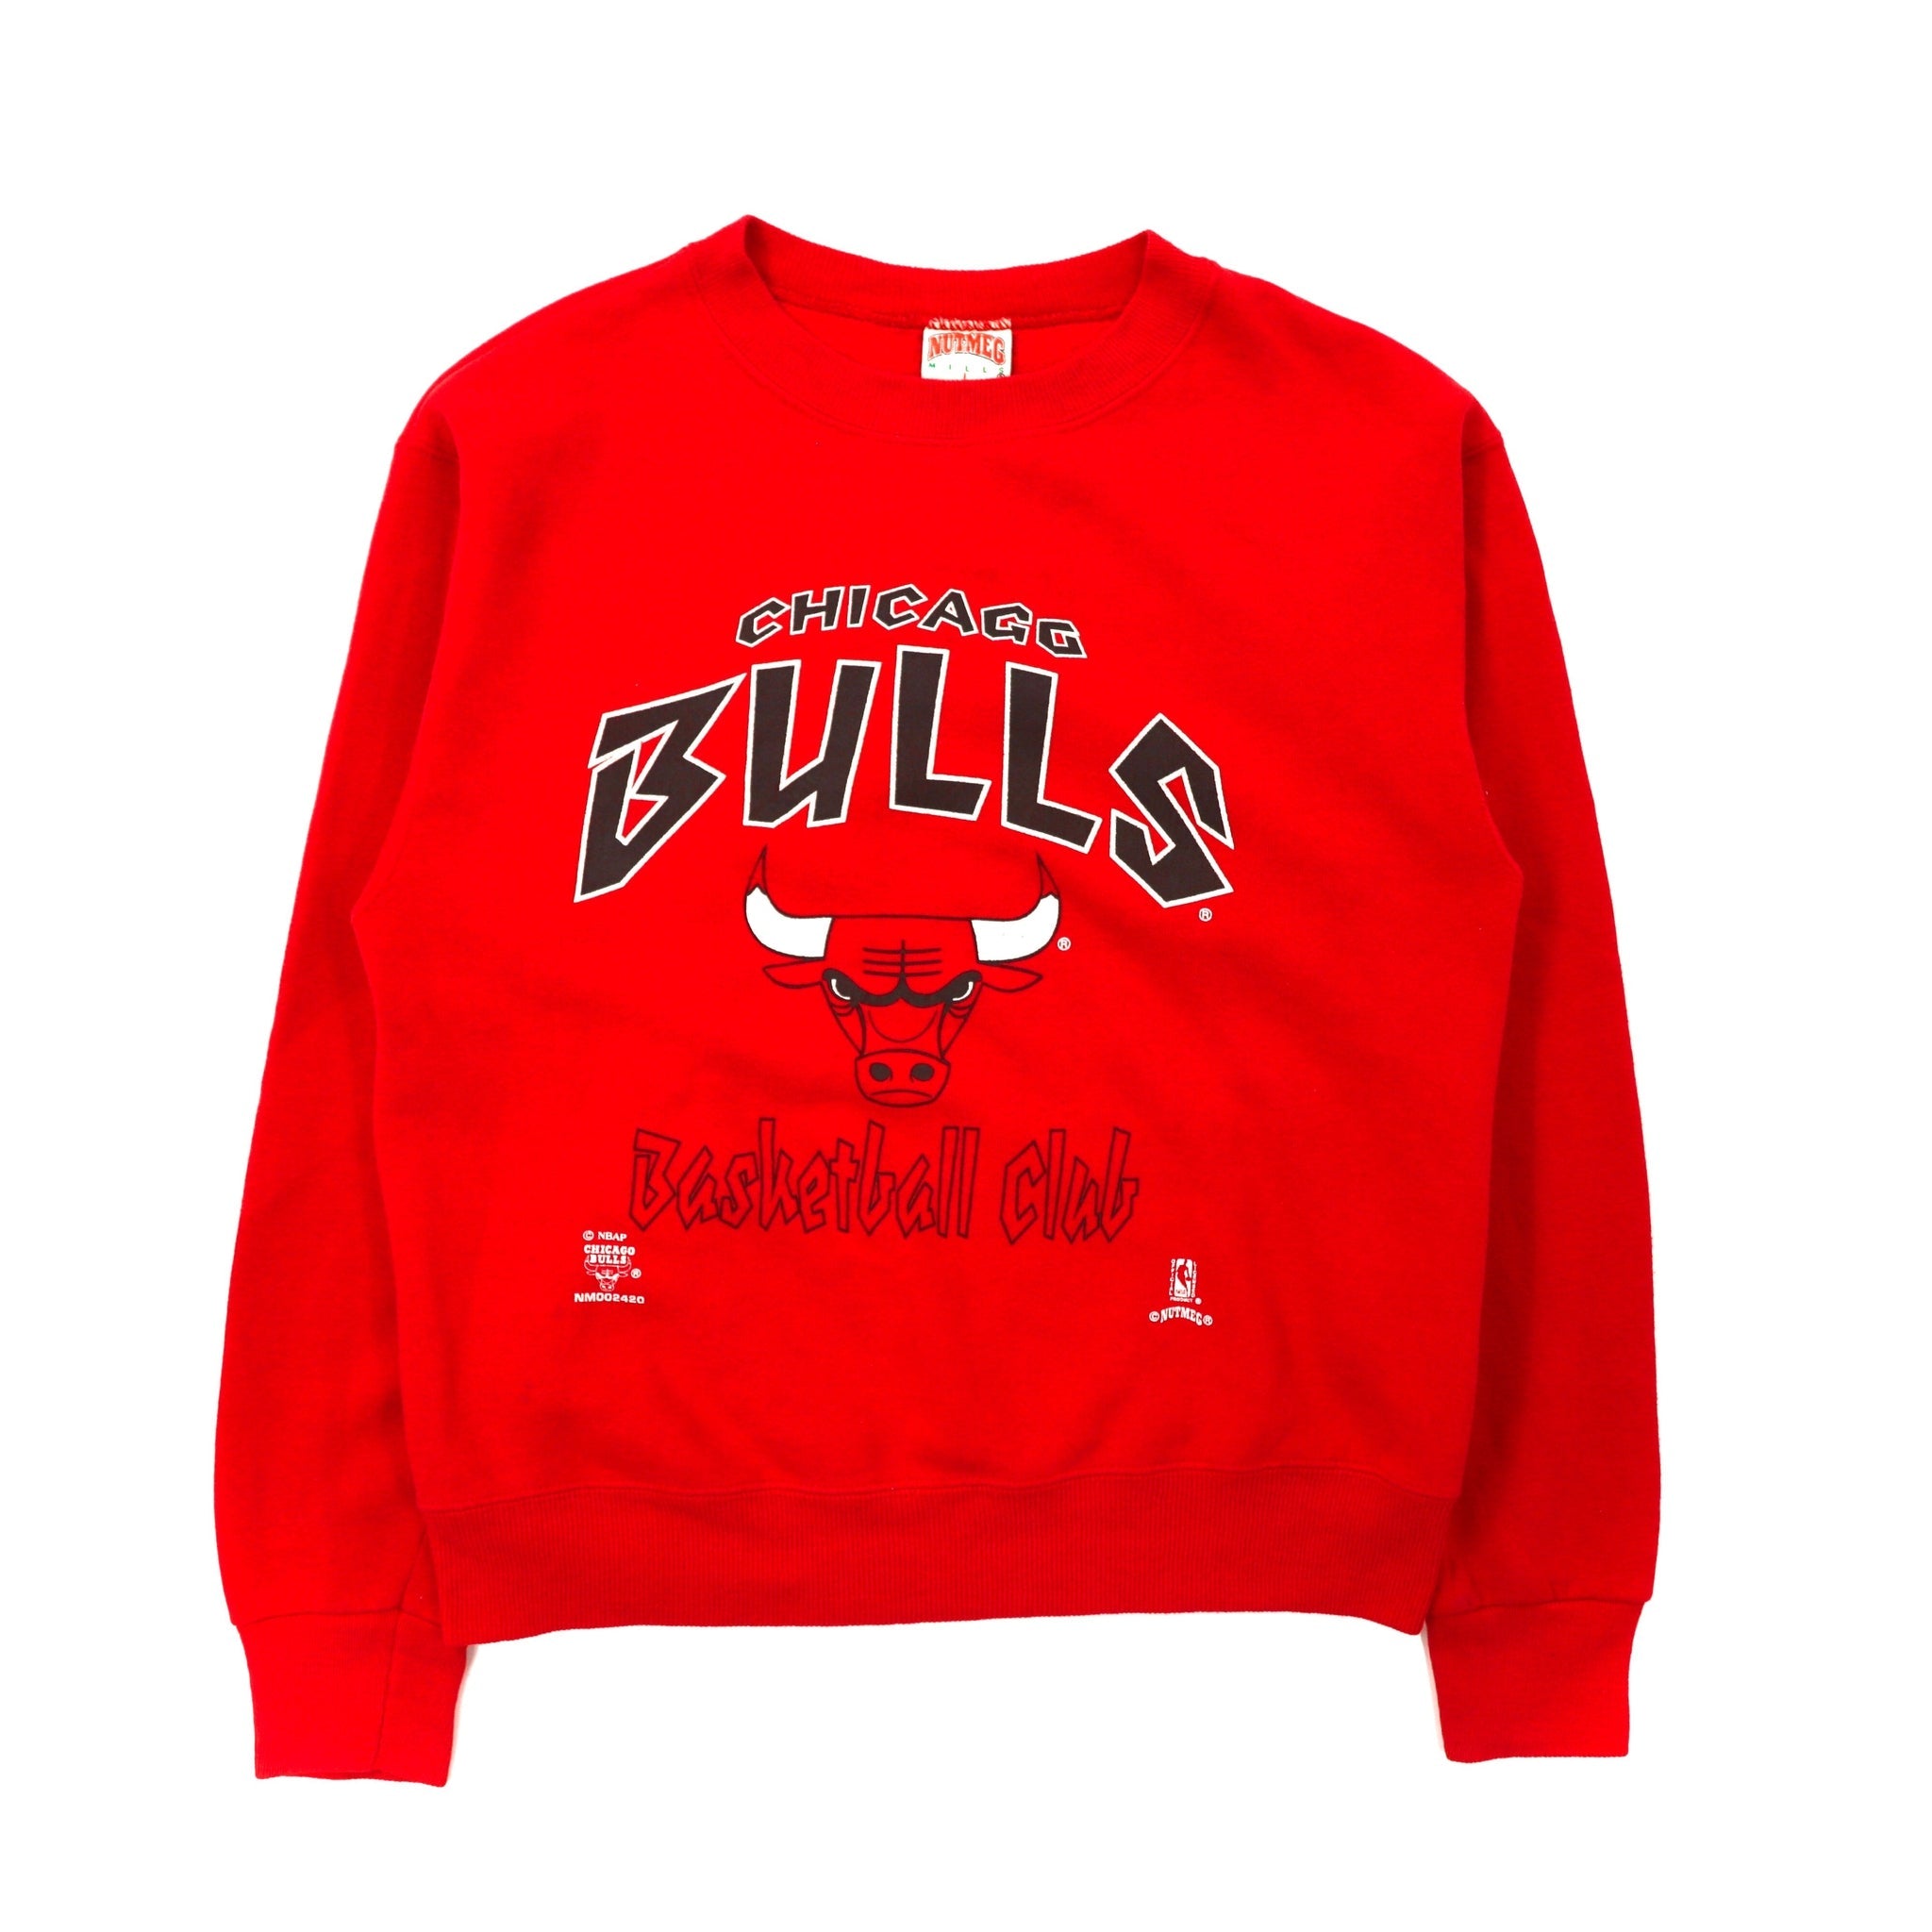 NutMeg Sweatshirt L Red Chicago Bulls 90s Made in USA NBA ...